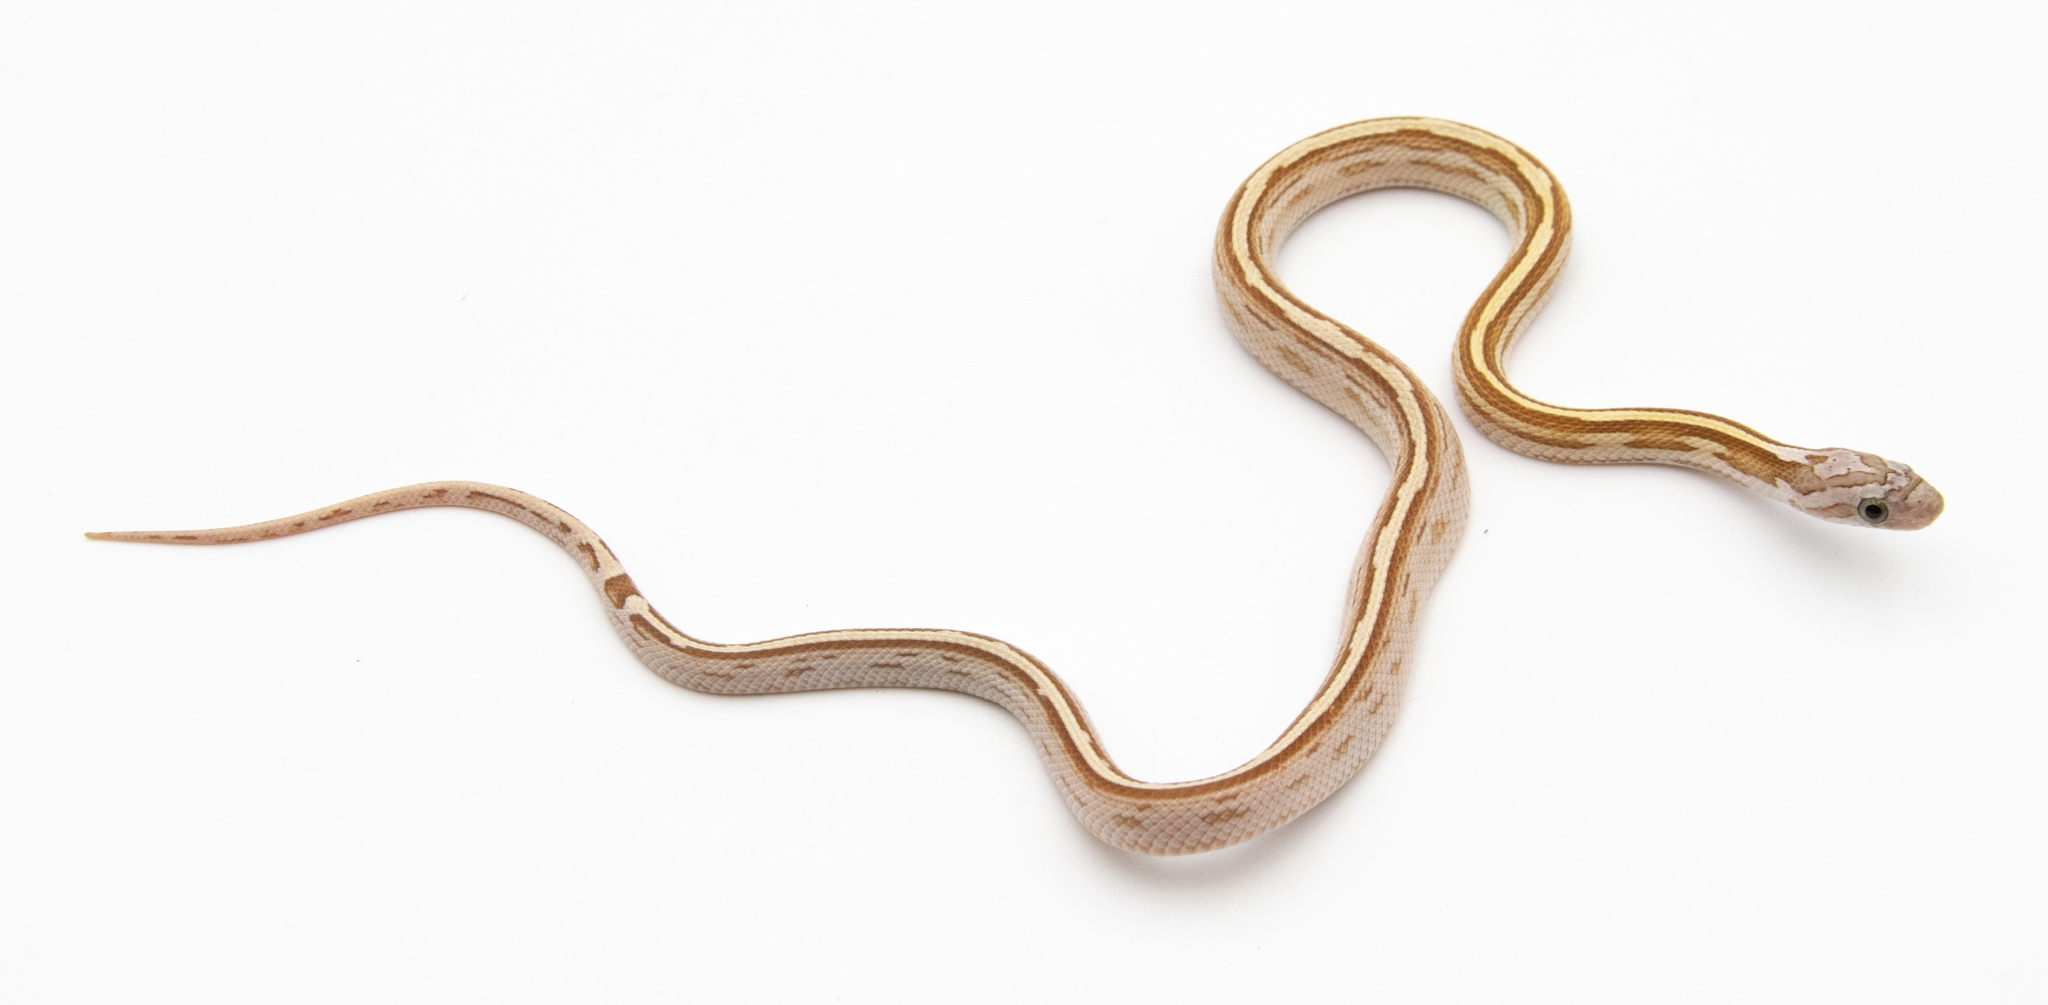 Serpent des blés - Pantherophis guttatus Tessera goldust stripe